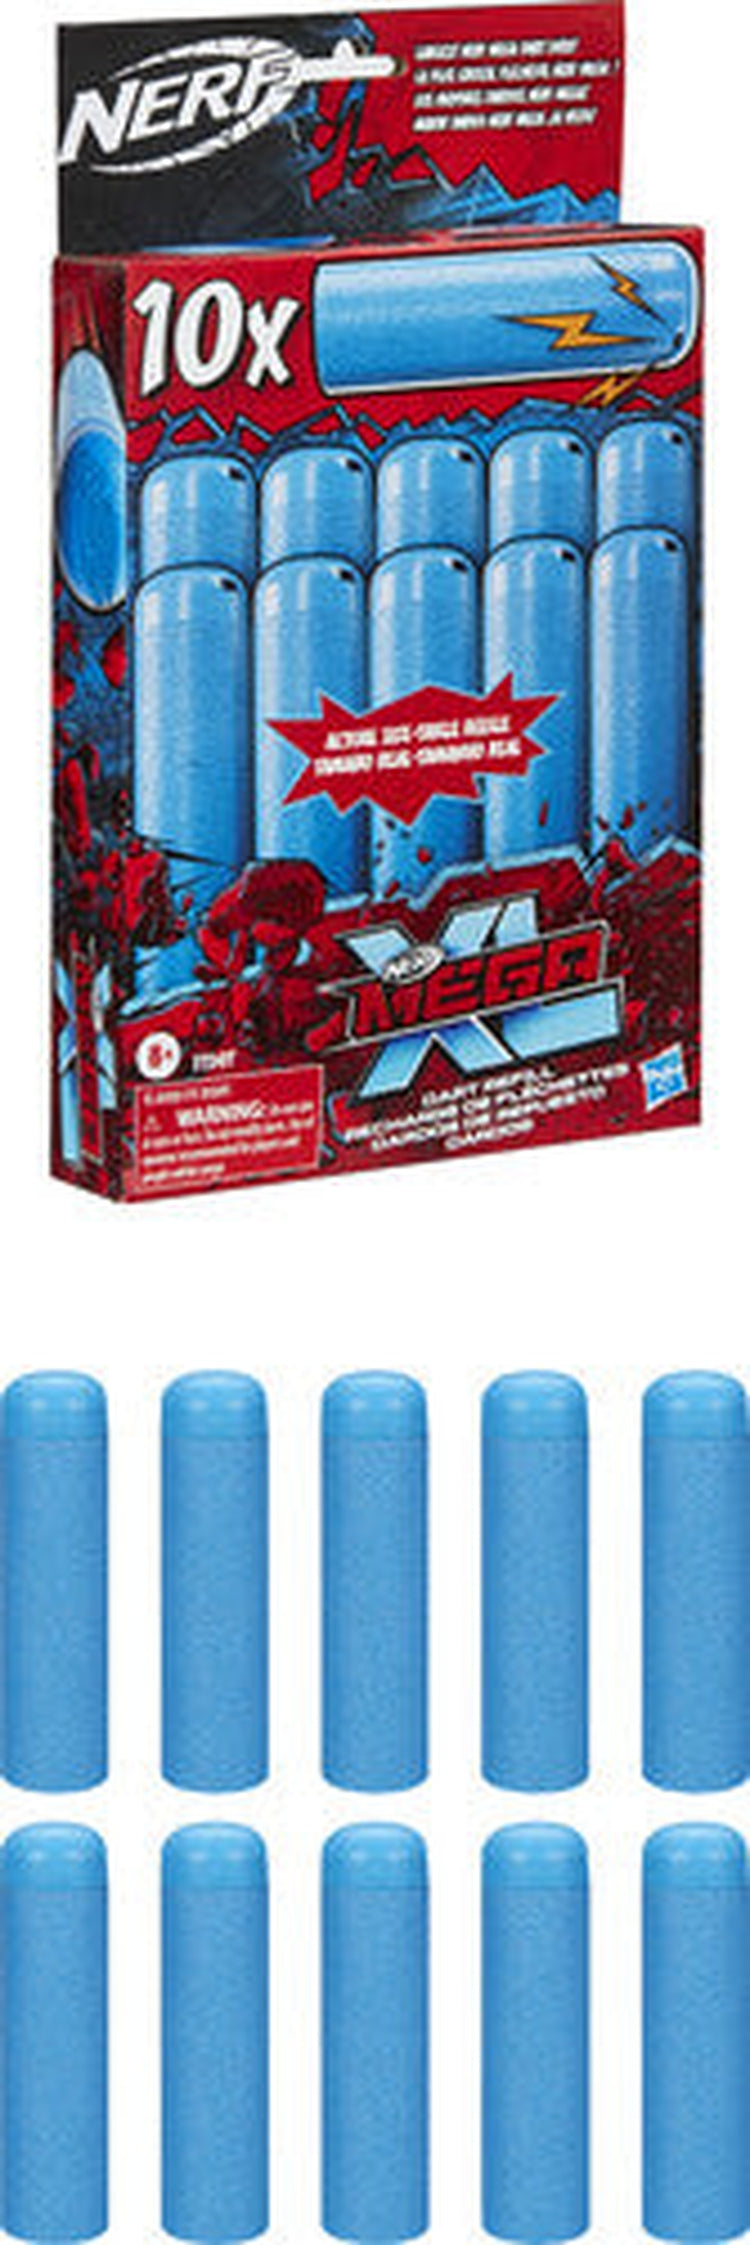 Hasbro Collectibles - Nerf Mega XL 10-Dart Refill